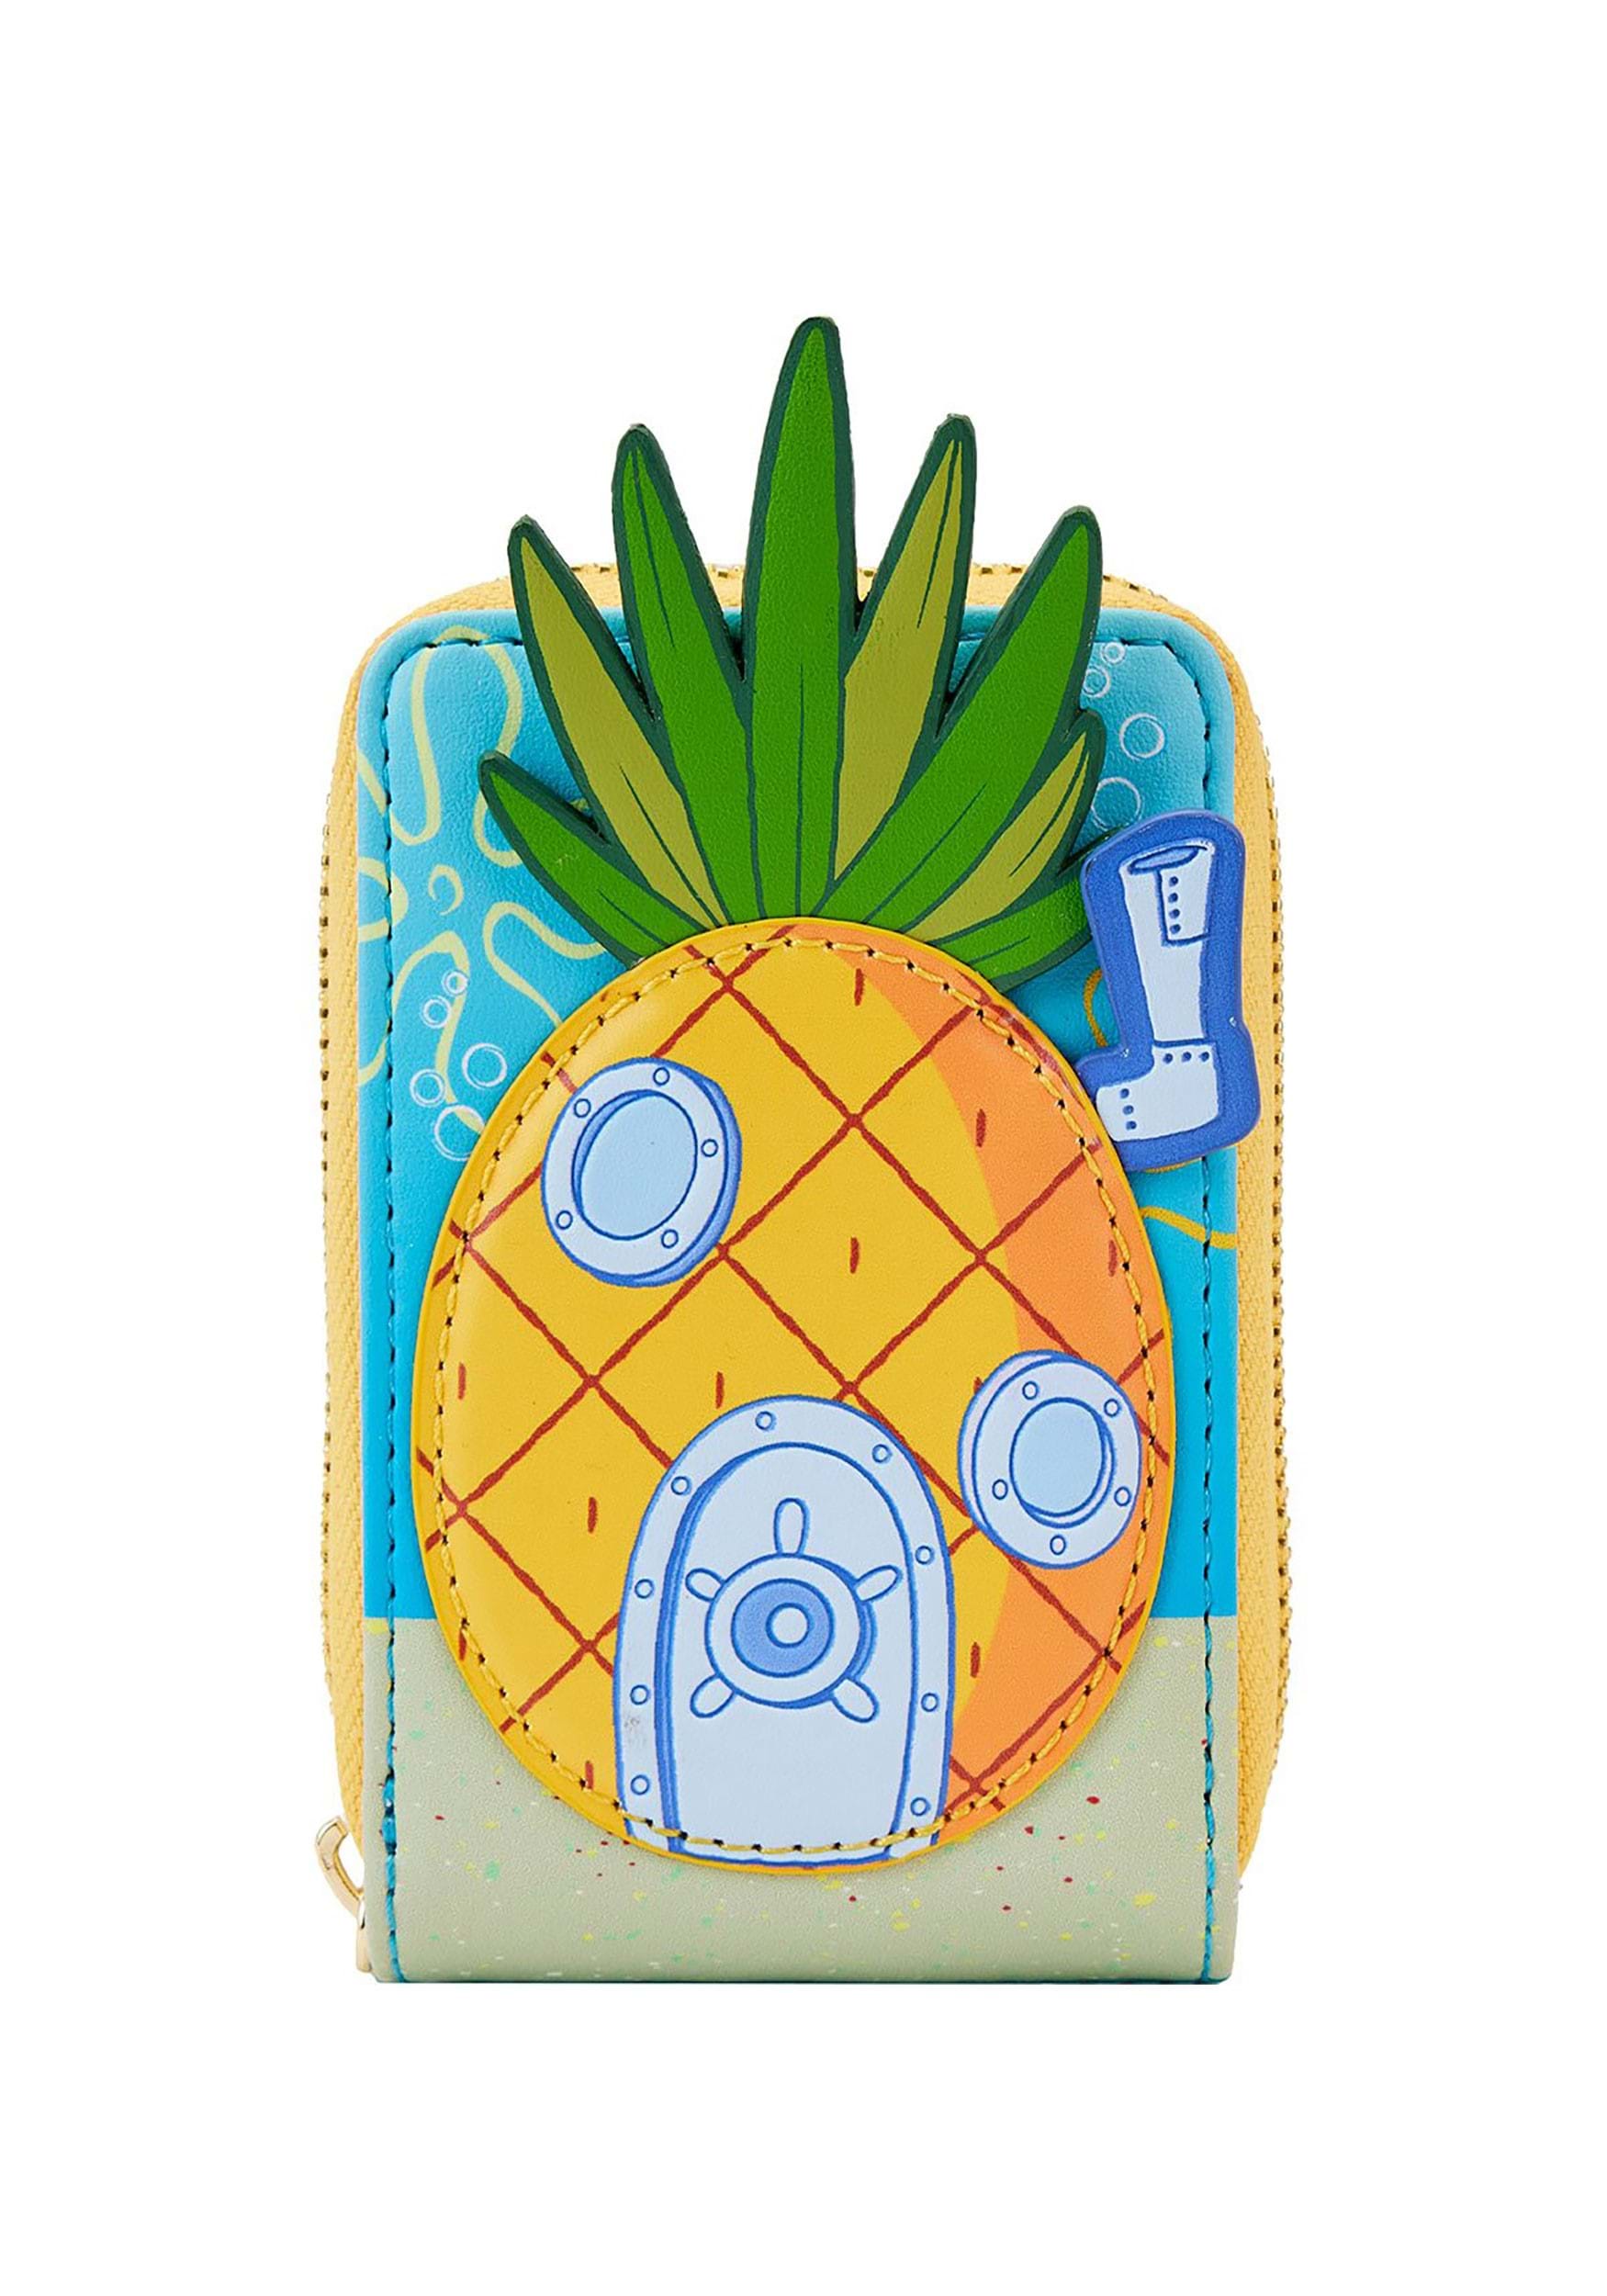 spongebob minecraft pineapple